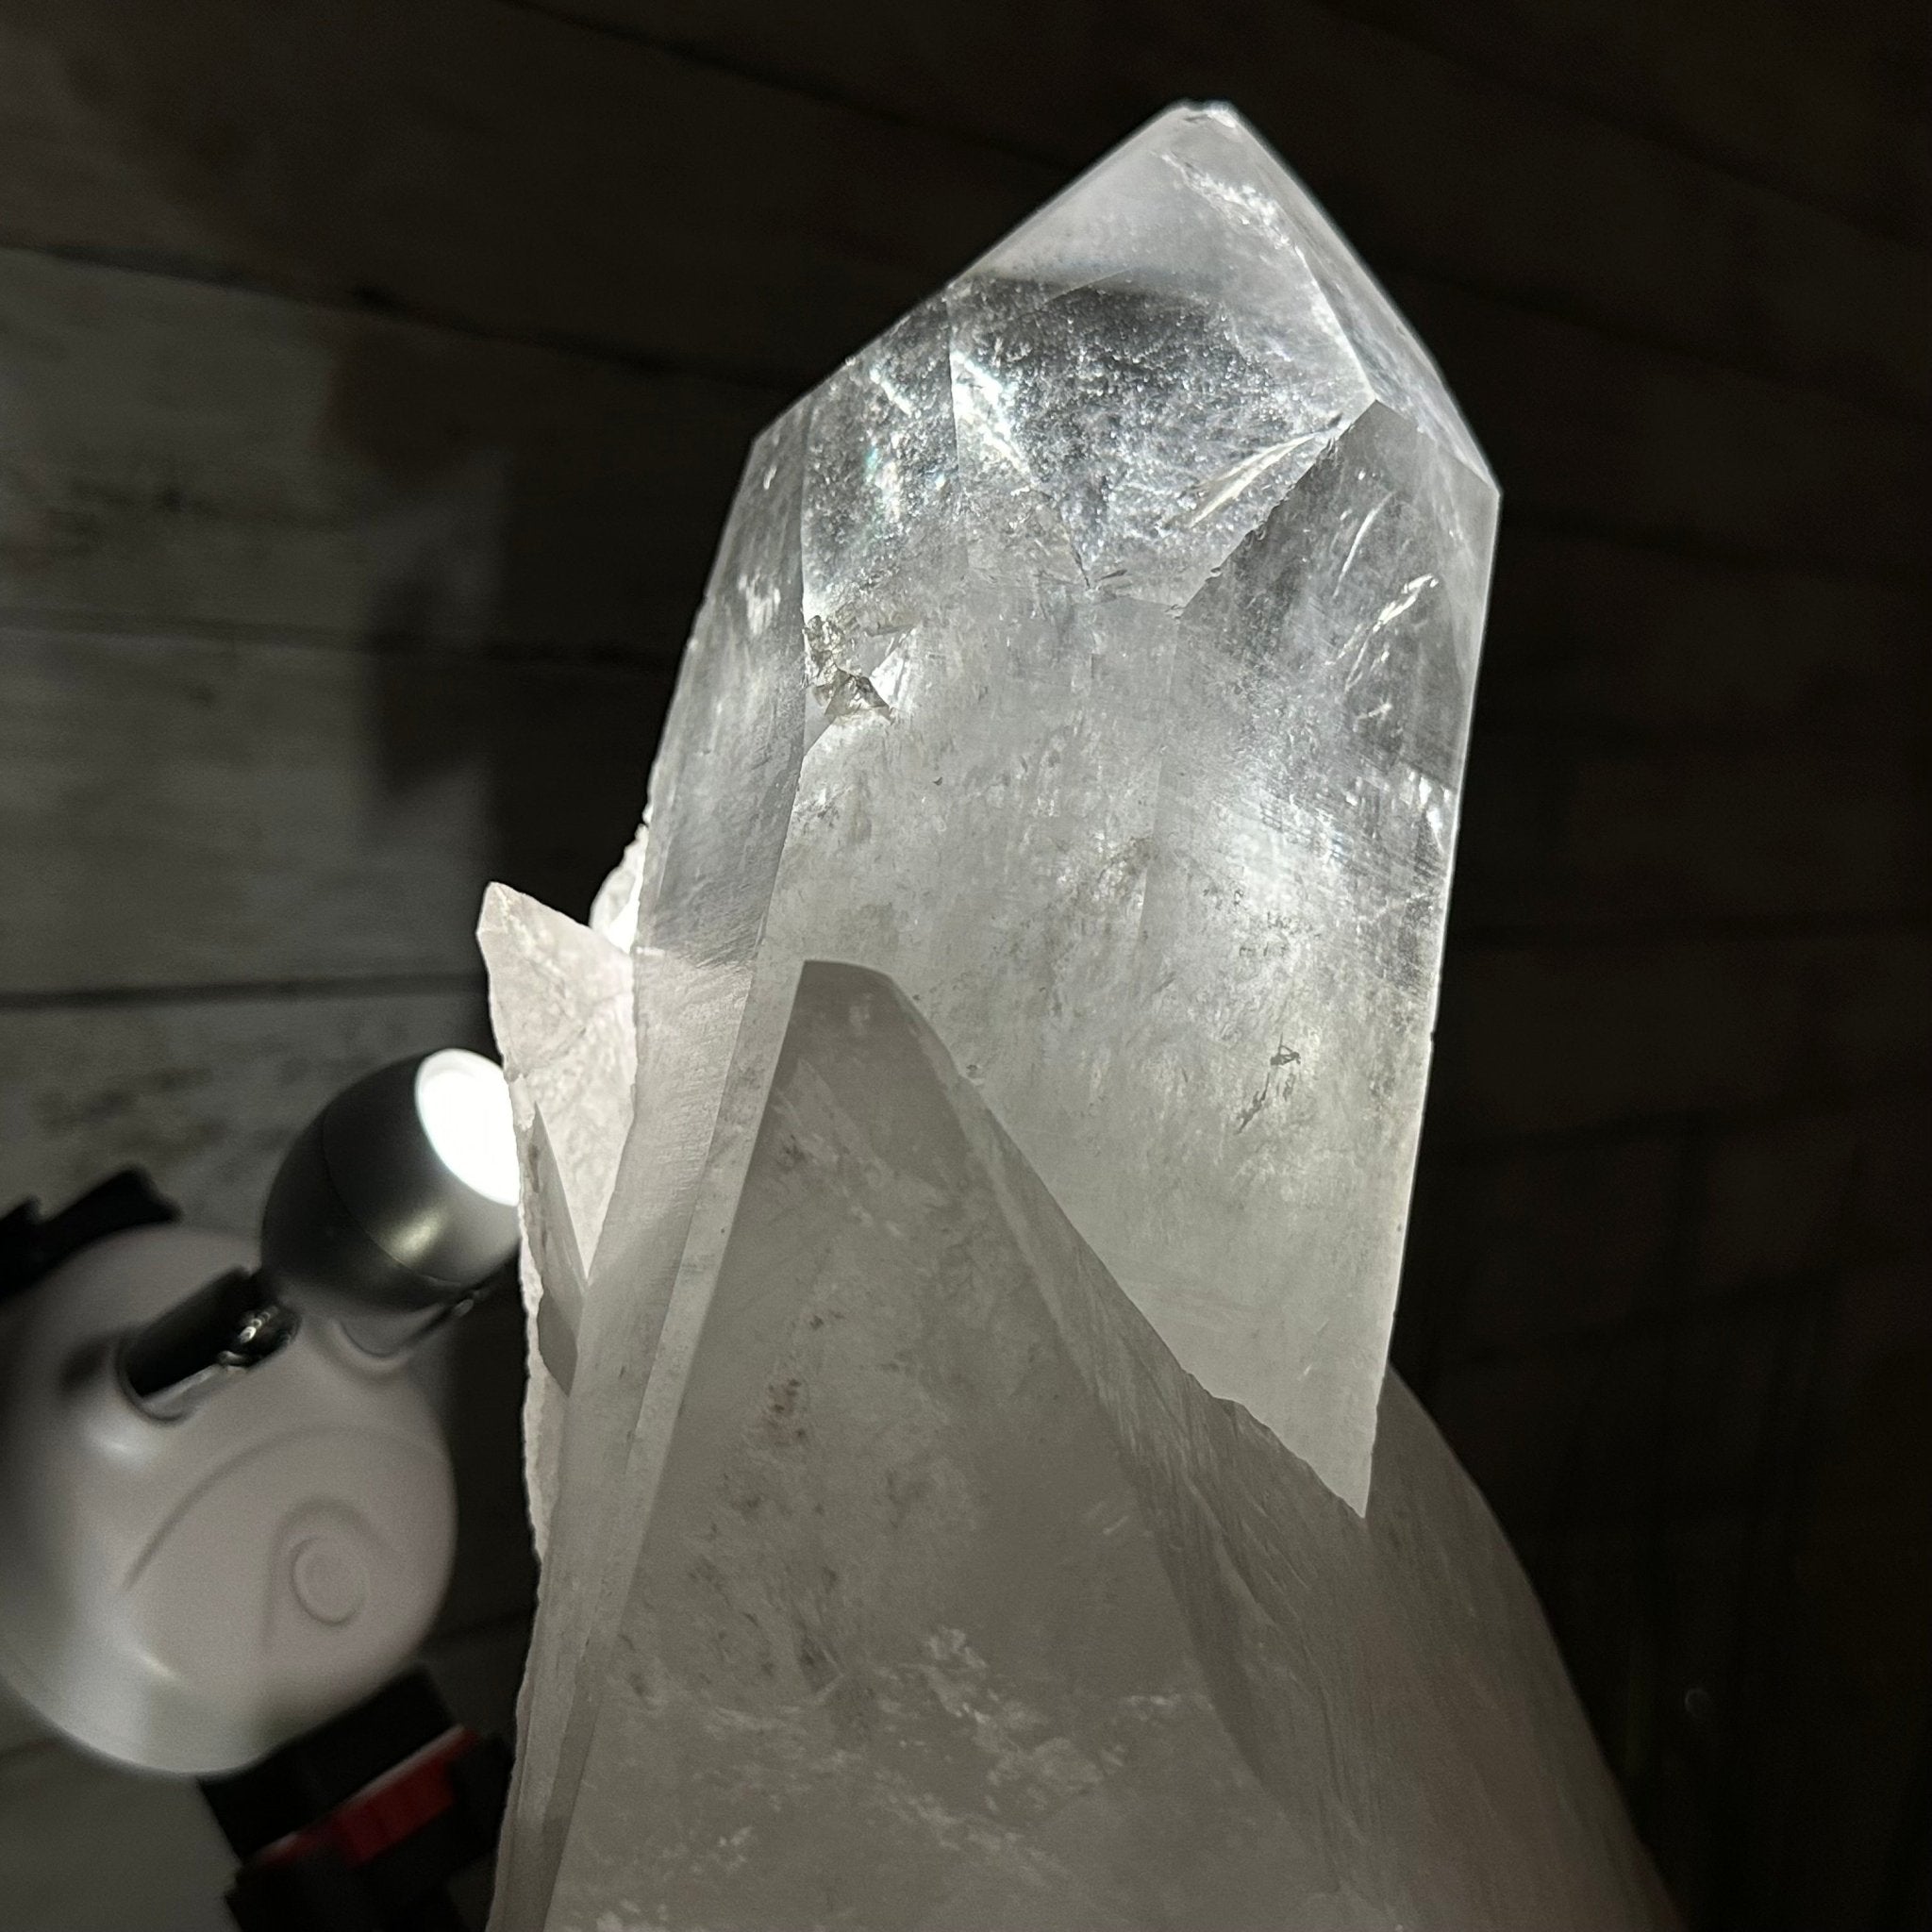 Clear Quartz Crystal Point on Rotating Base, 38.7 lbs & 20.5" Tall #3120CQ-007 - Brazil GemsBrazil GemsClear Quartz Crystal Point on Rotating Base, 38.7 lbs & 20.5" Tall #3120CQ-007Crystal Points3120CQ-007